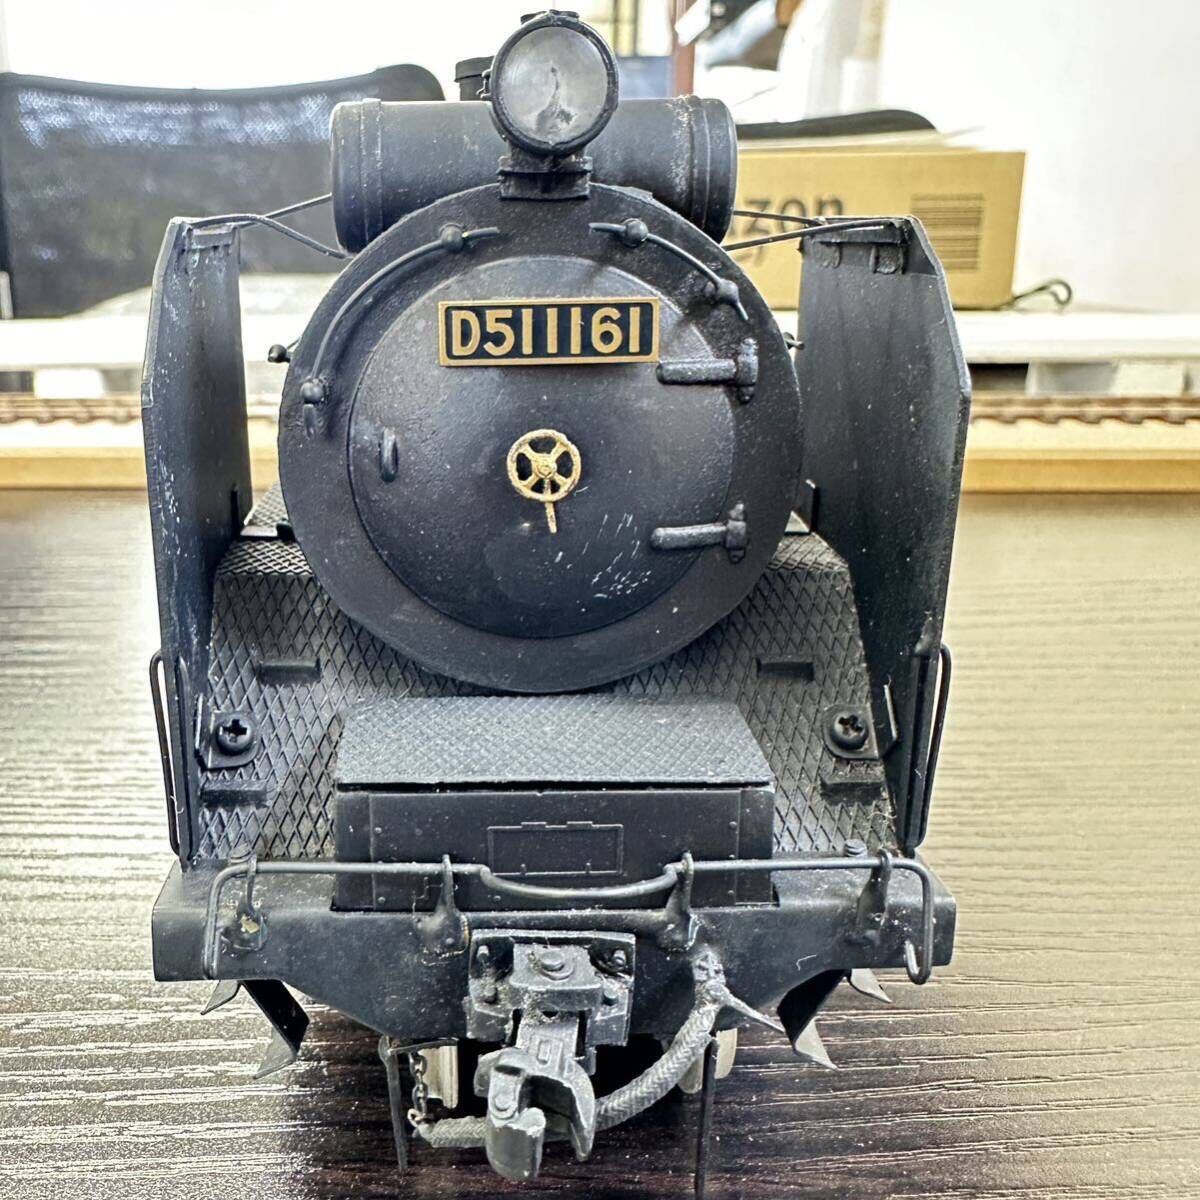 栄光の蒸気機関車D51/鉄道模型 /D511161/ D51形/物置/台座ケース付き_画像8